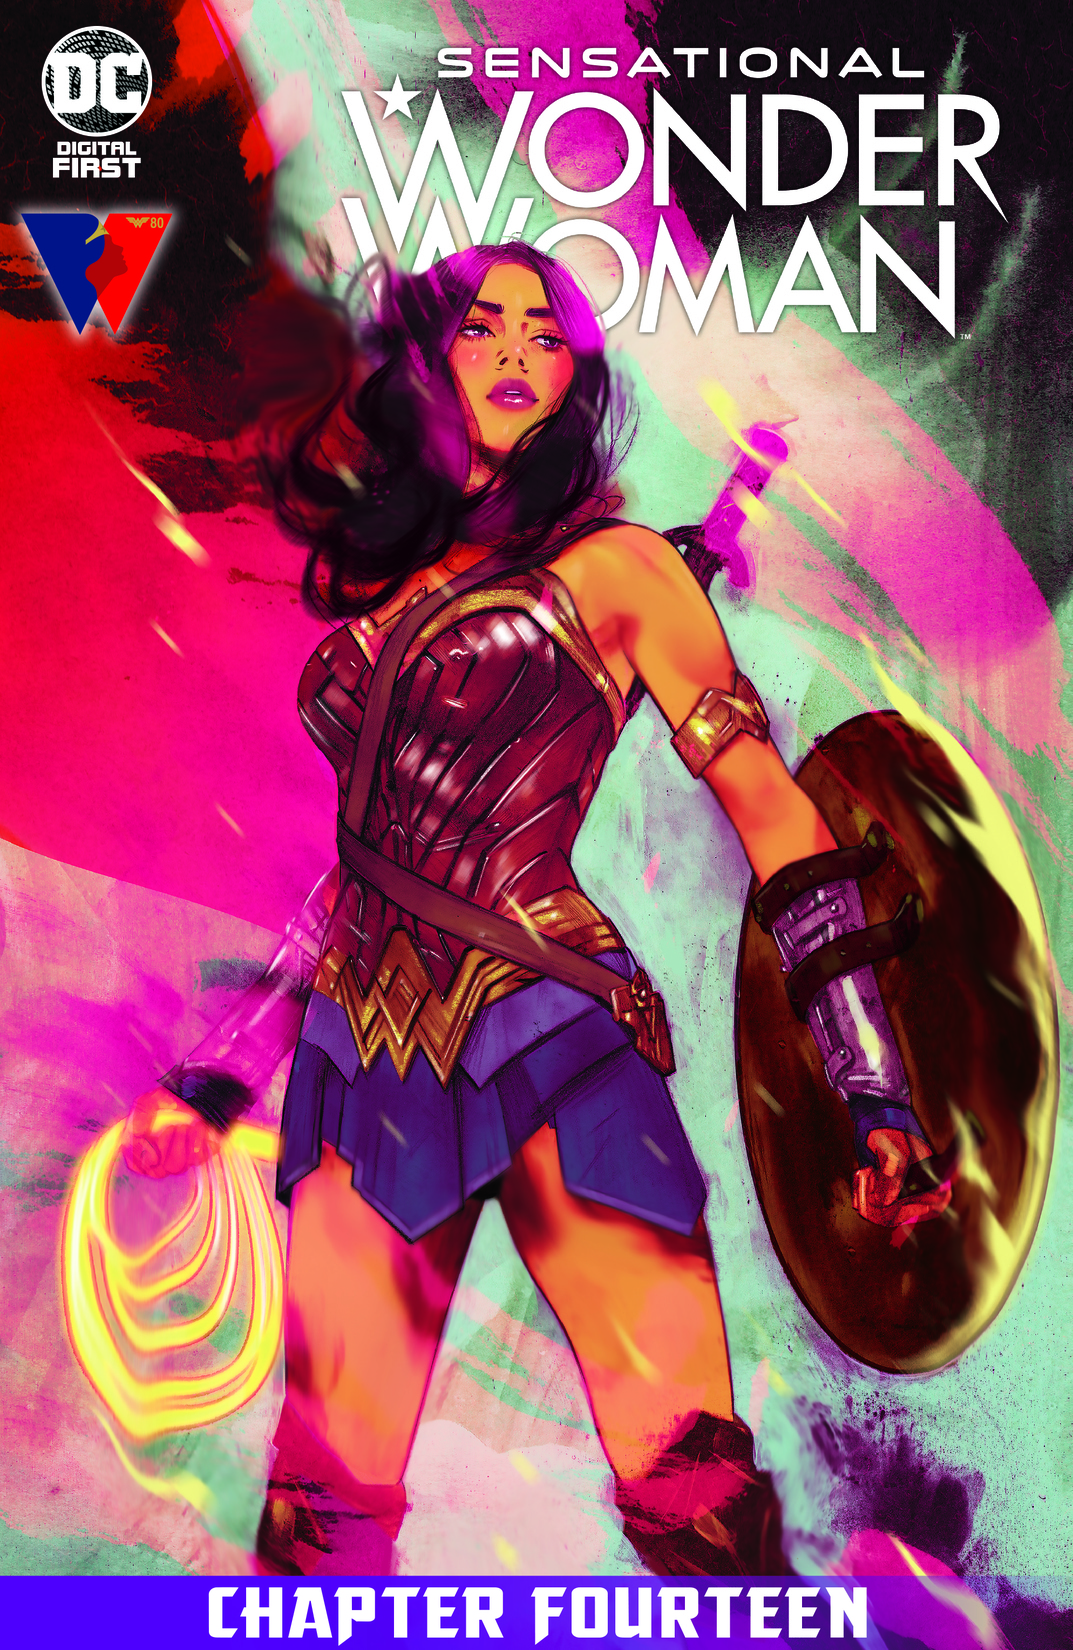 Sensational Wonder Woman #14 preview images